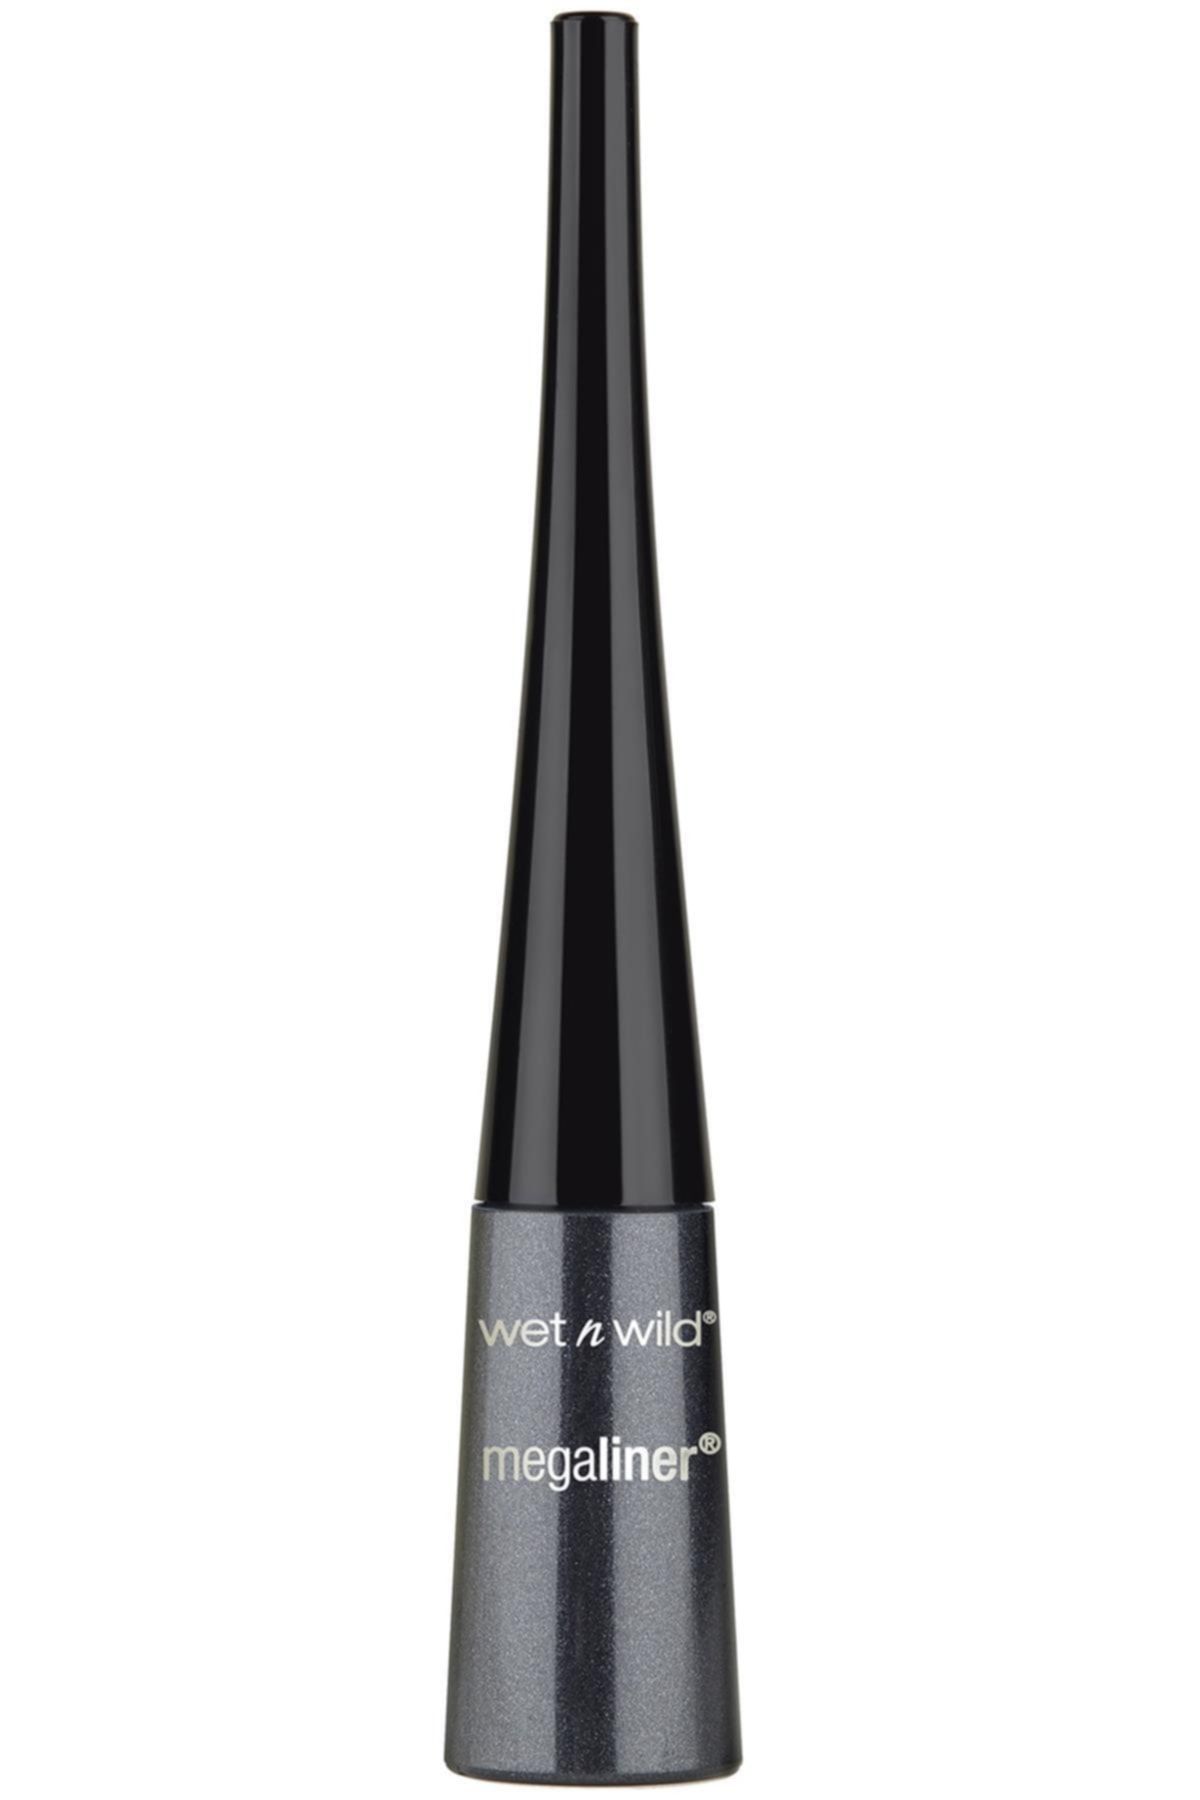 WET N WİLD Marka: Megaliner Liquid Eyeliner Black Kategori: Eyeliner